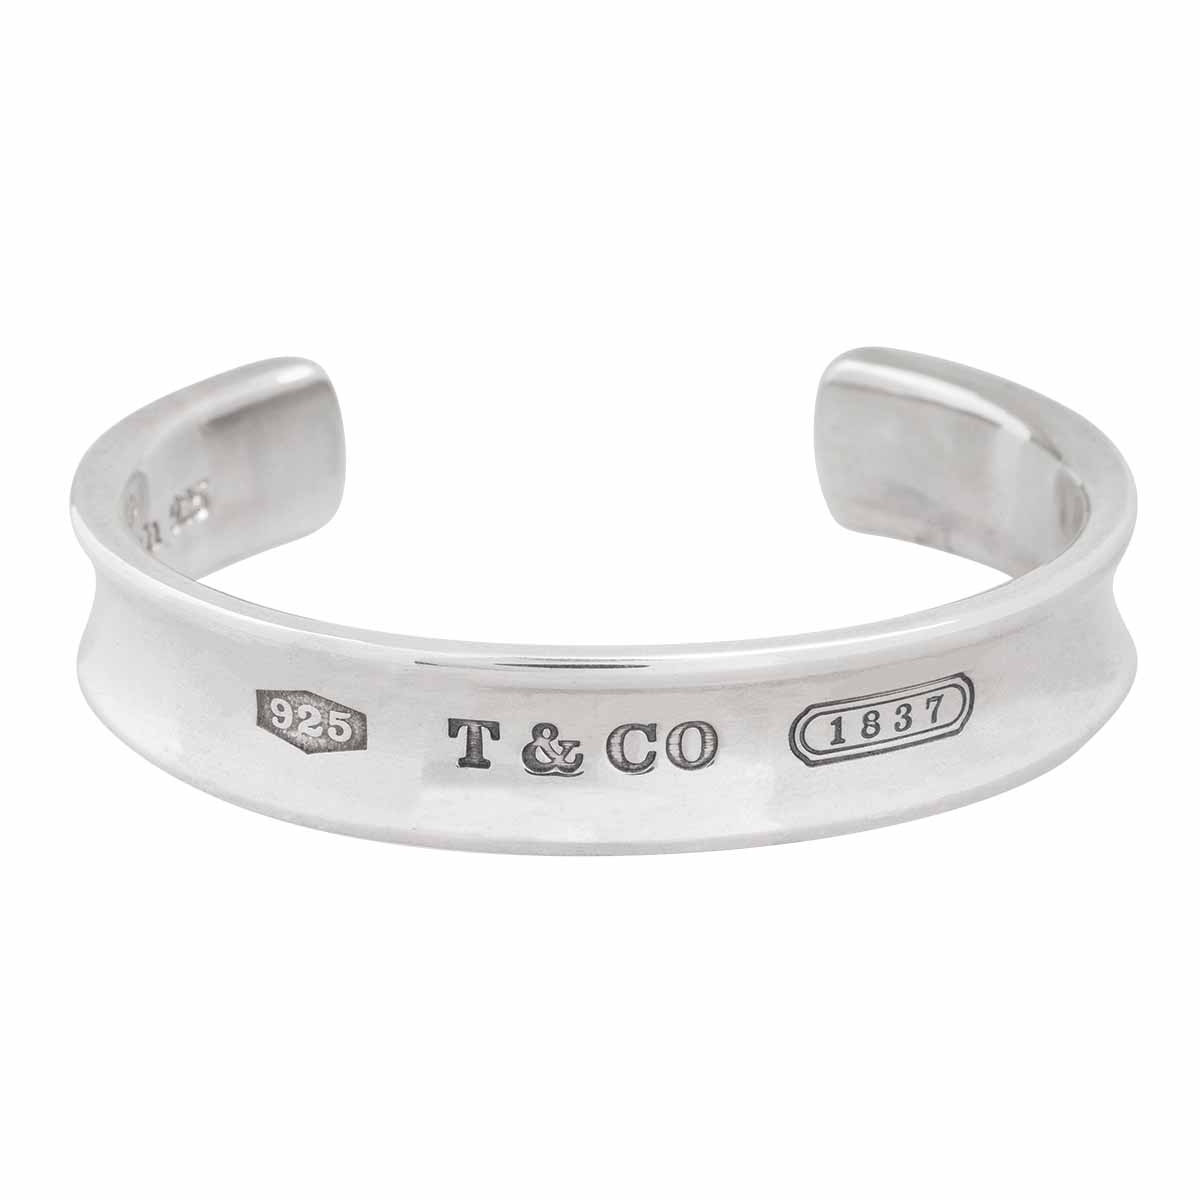 tiffany & co cuff bracelet